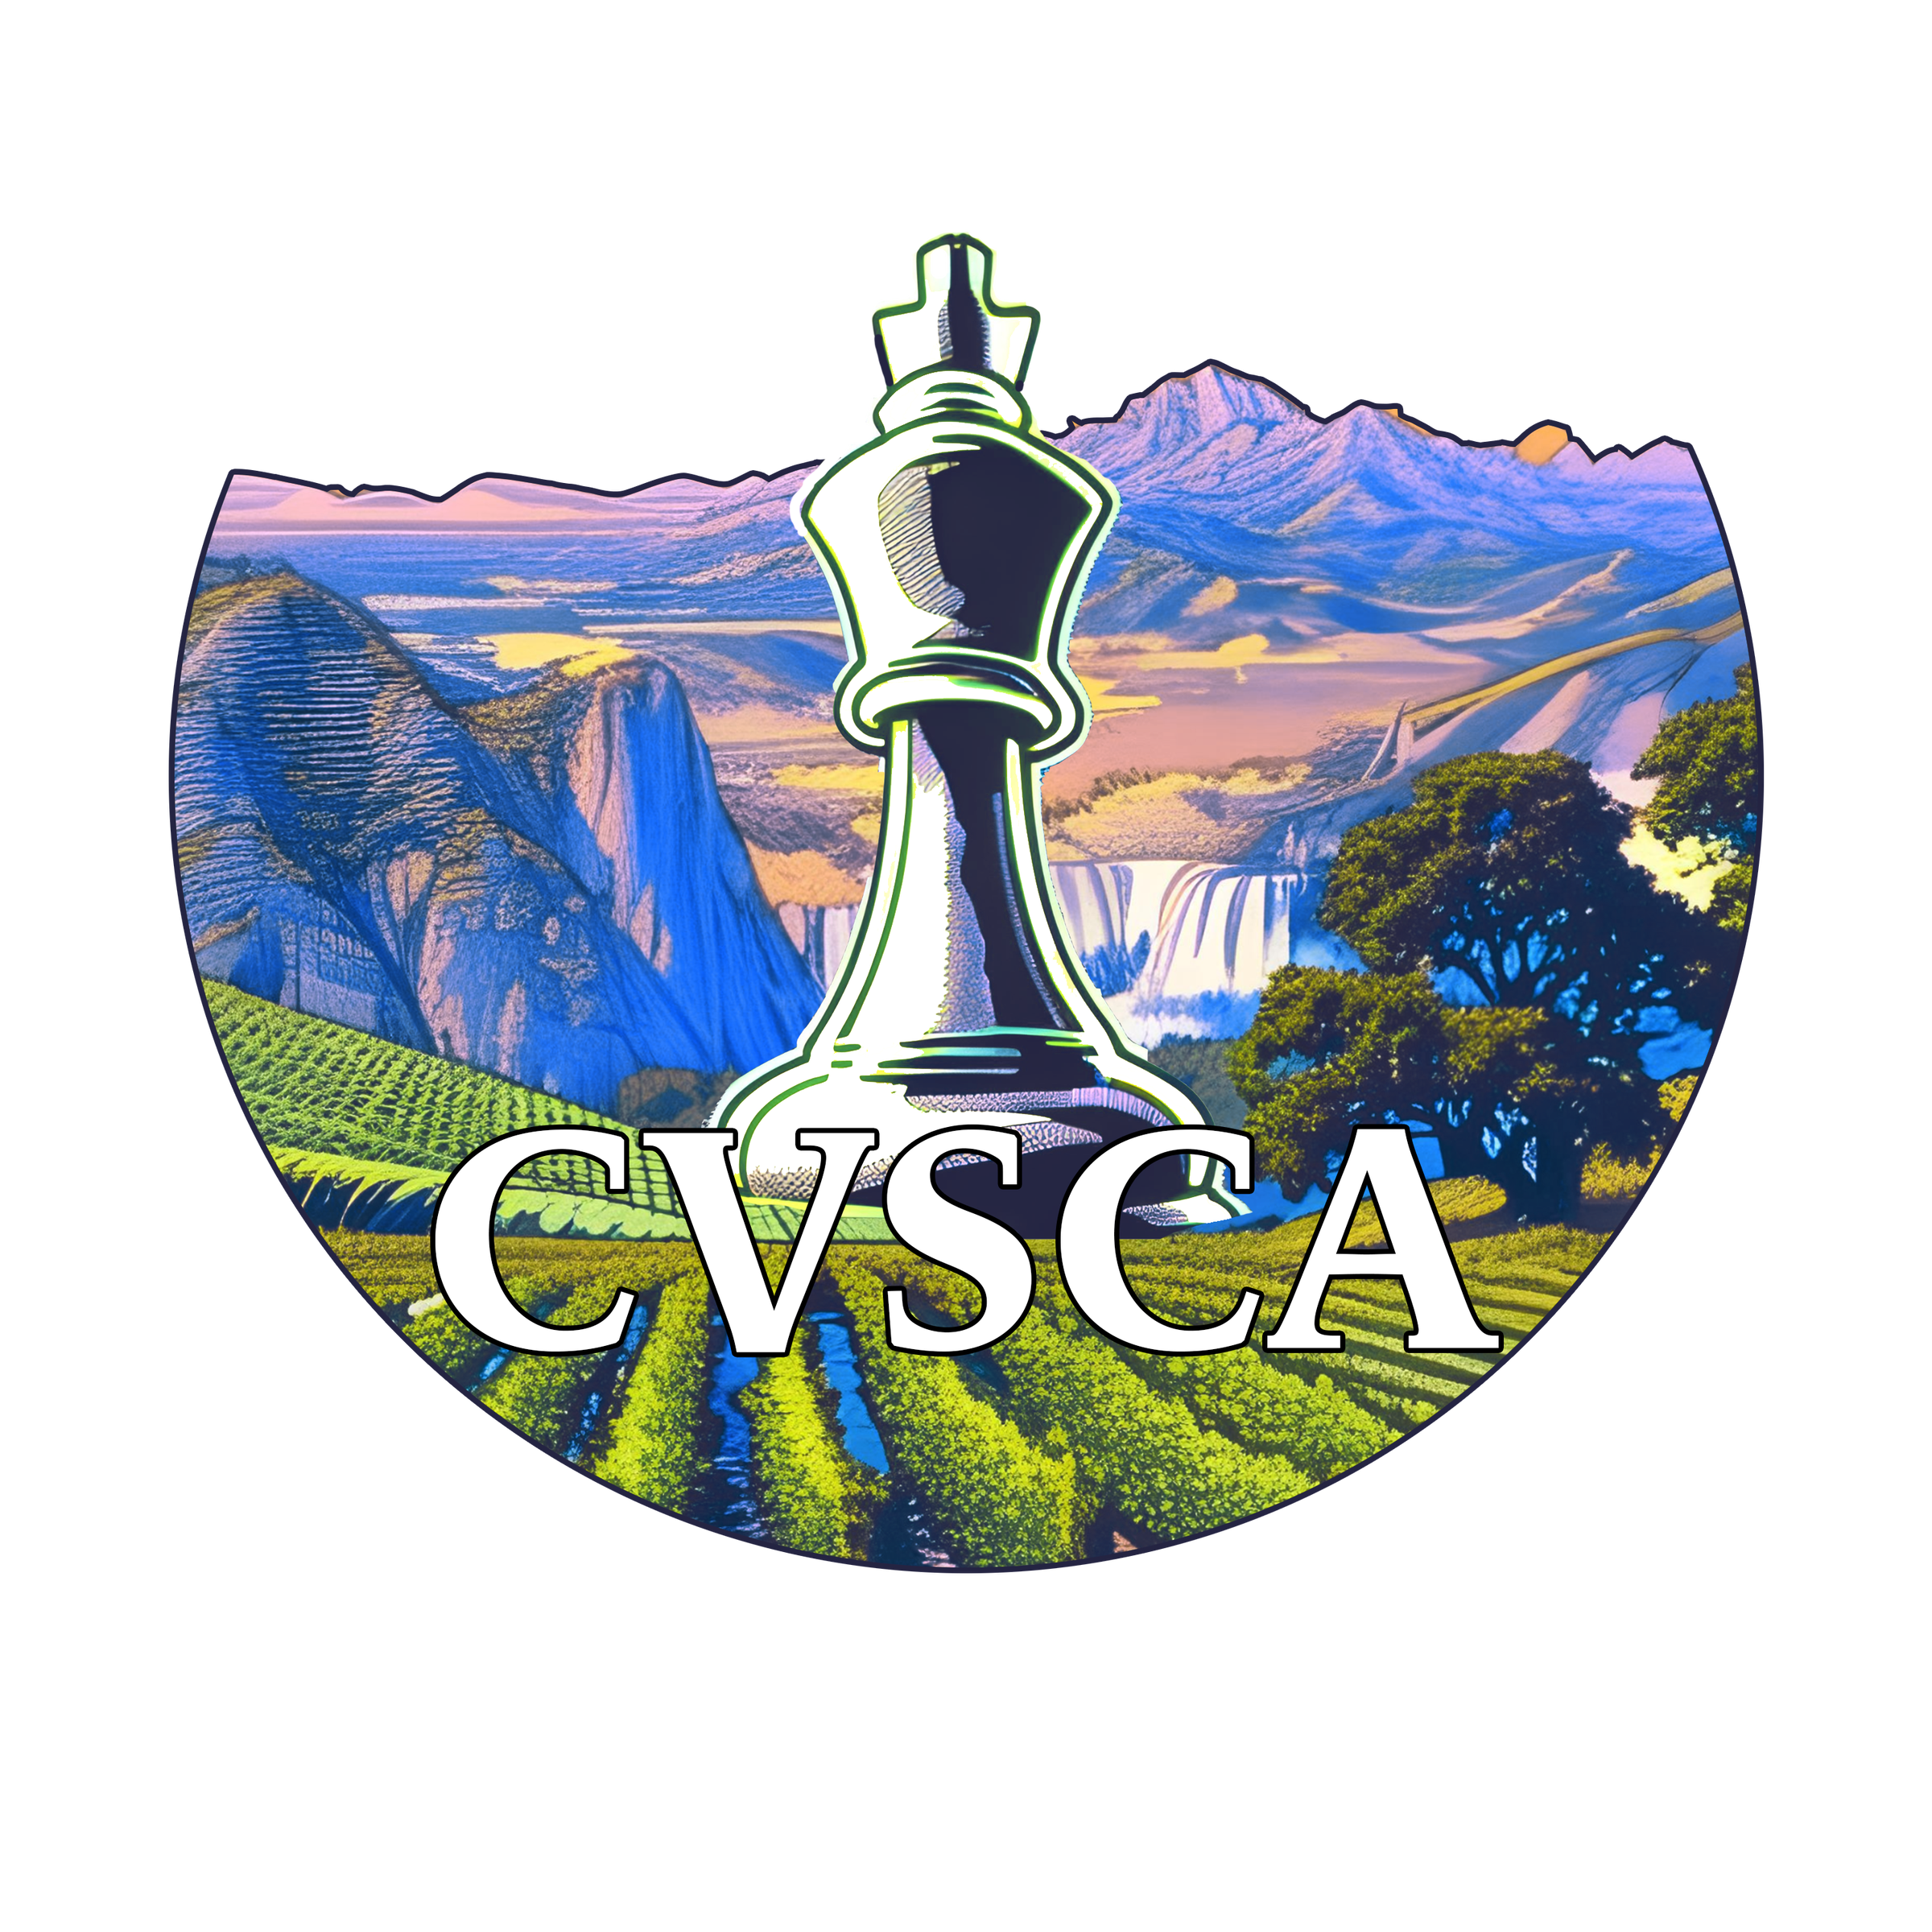 ChessKid.com/TCA Super Regional – Regions I, II, III